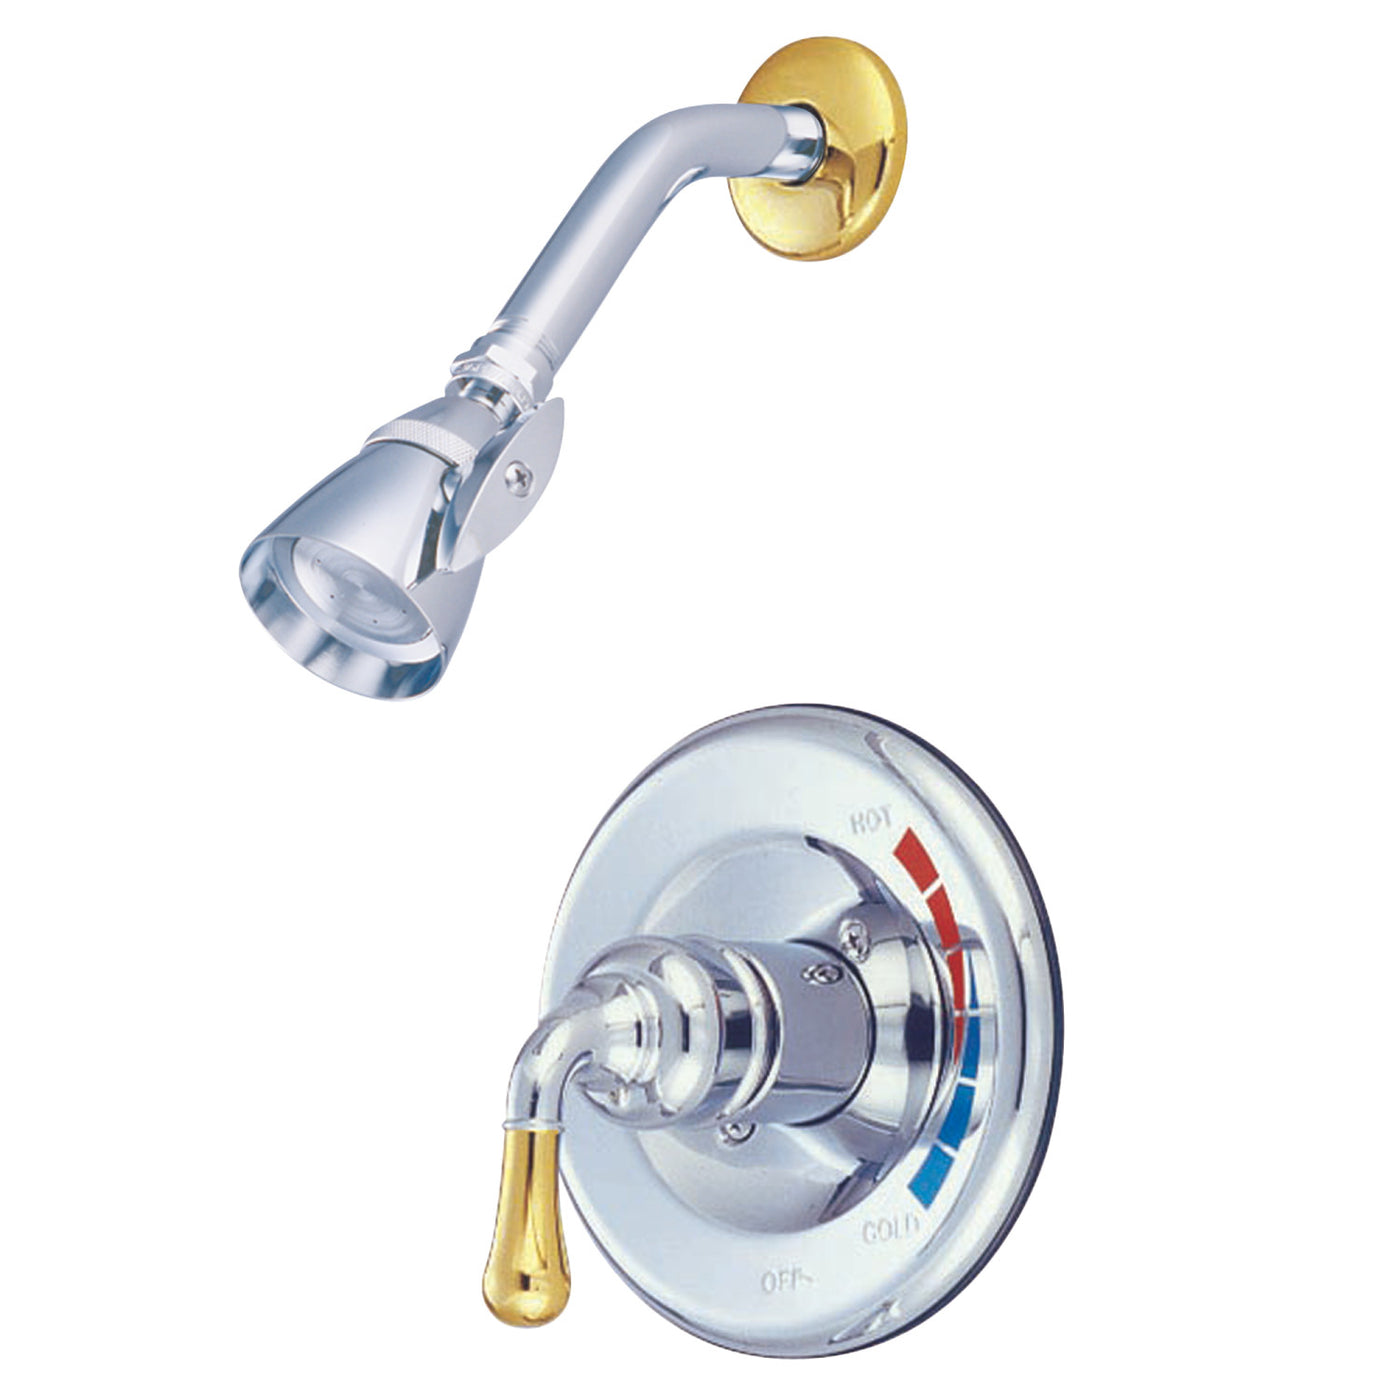 Elements of Design EB634SO Shower Faucet, Polished Chrome/Polished Brass